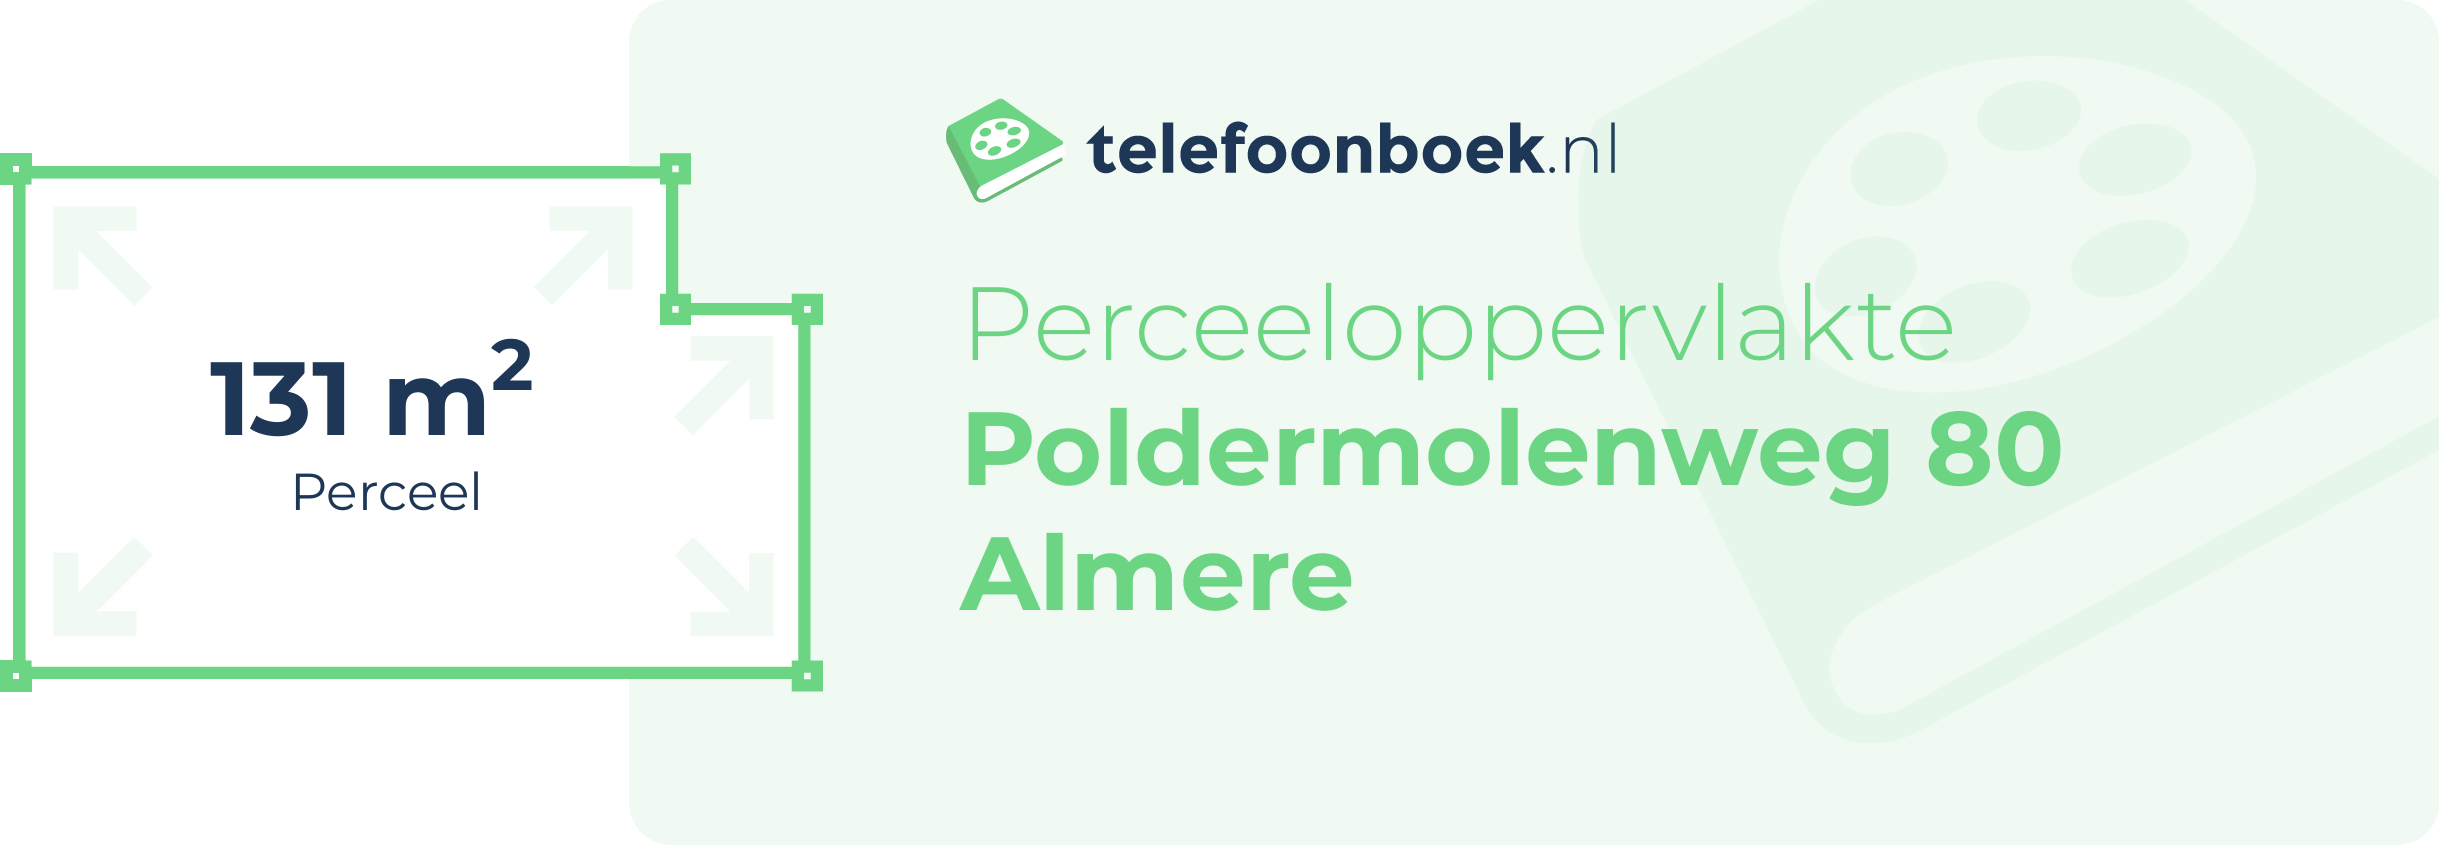 Perceeloppervlakte Poldermolenweg 80 Almere